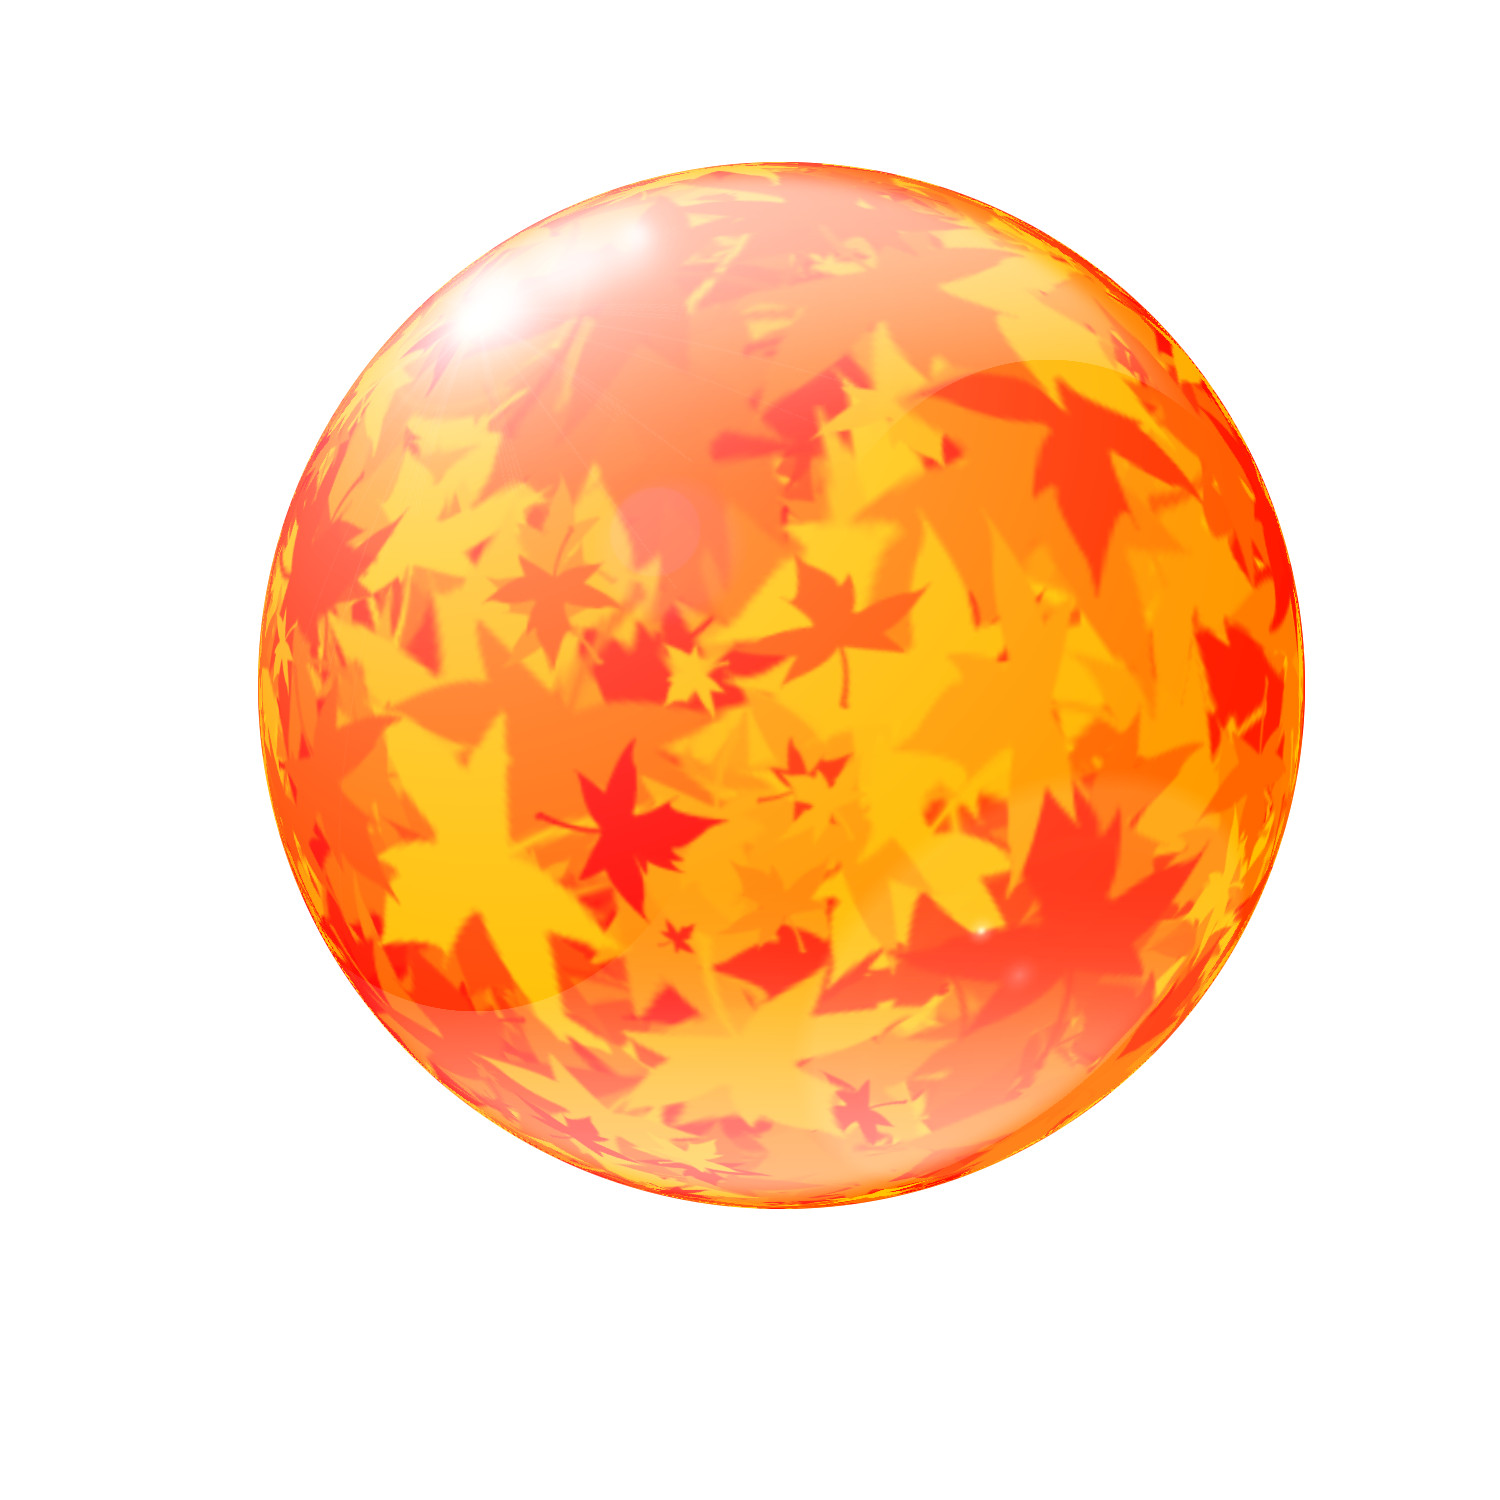 Maple leaf sphere of doom XD by NarutoHQfan